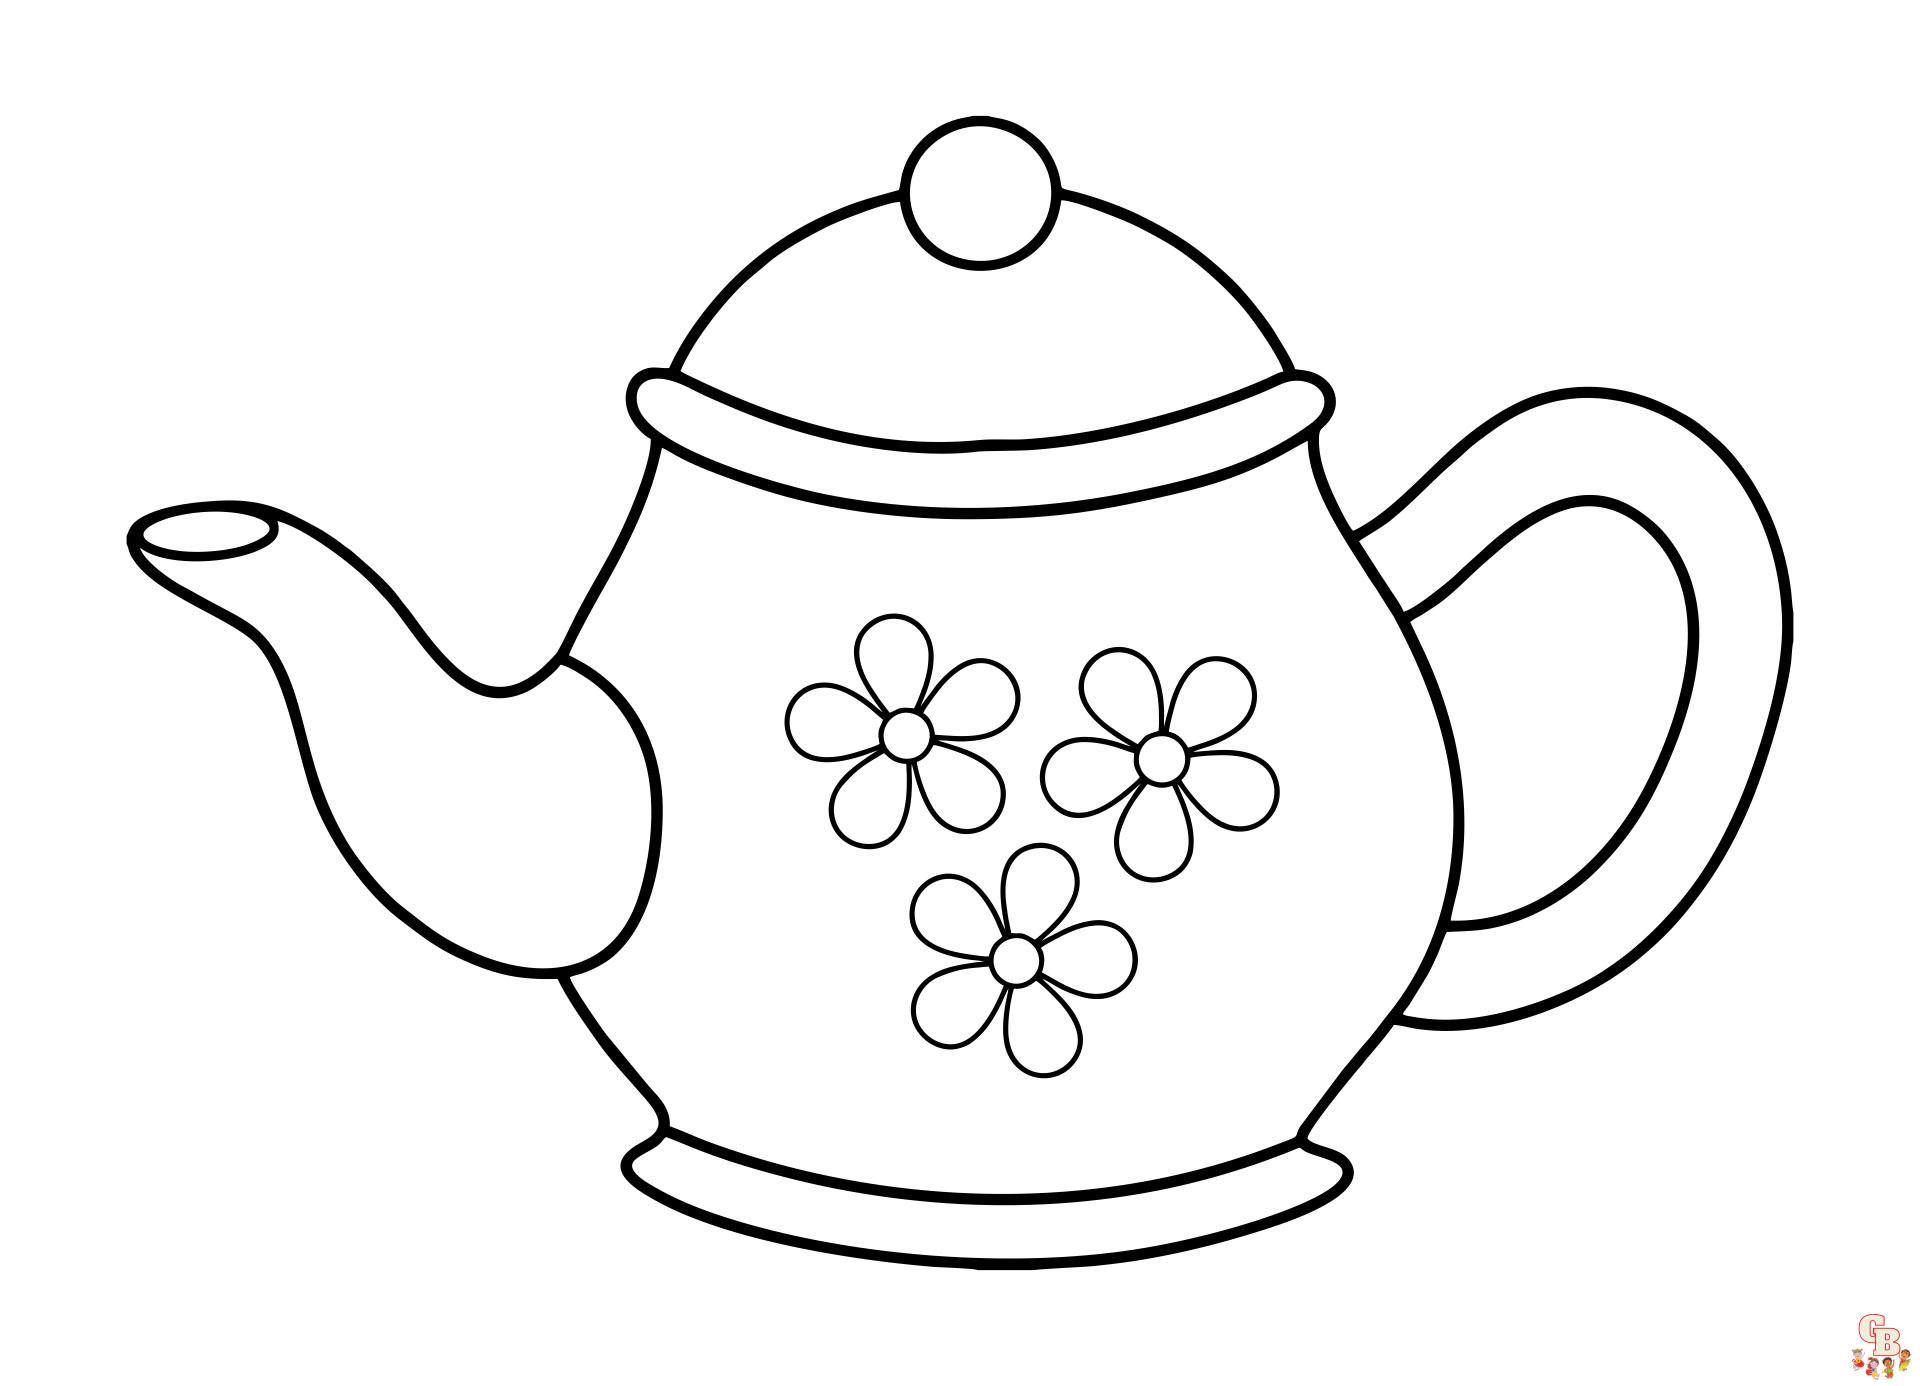 Enjoy coloring cute teapot coloring pages